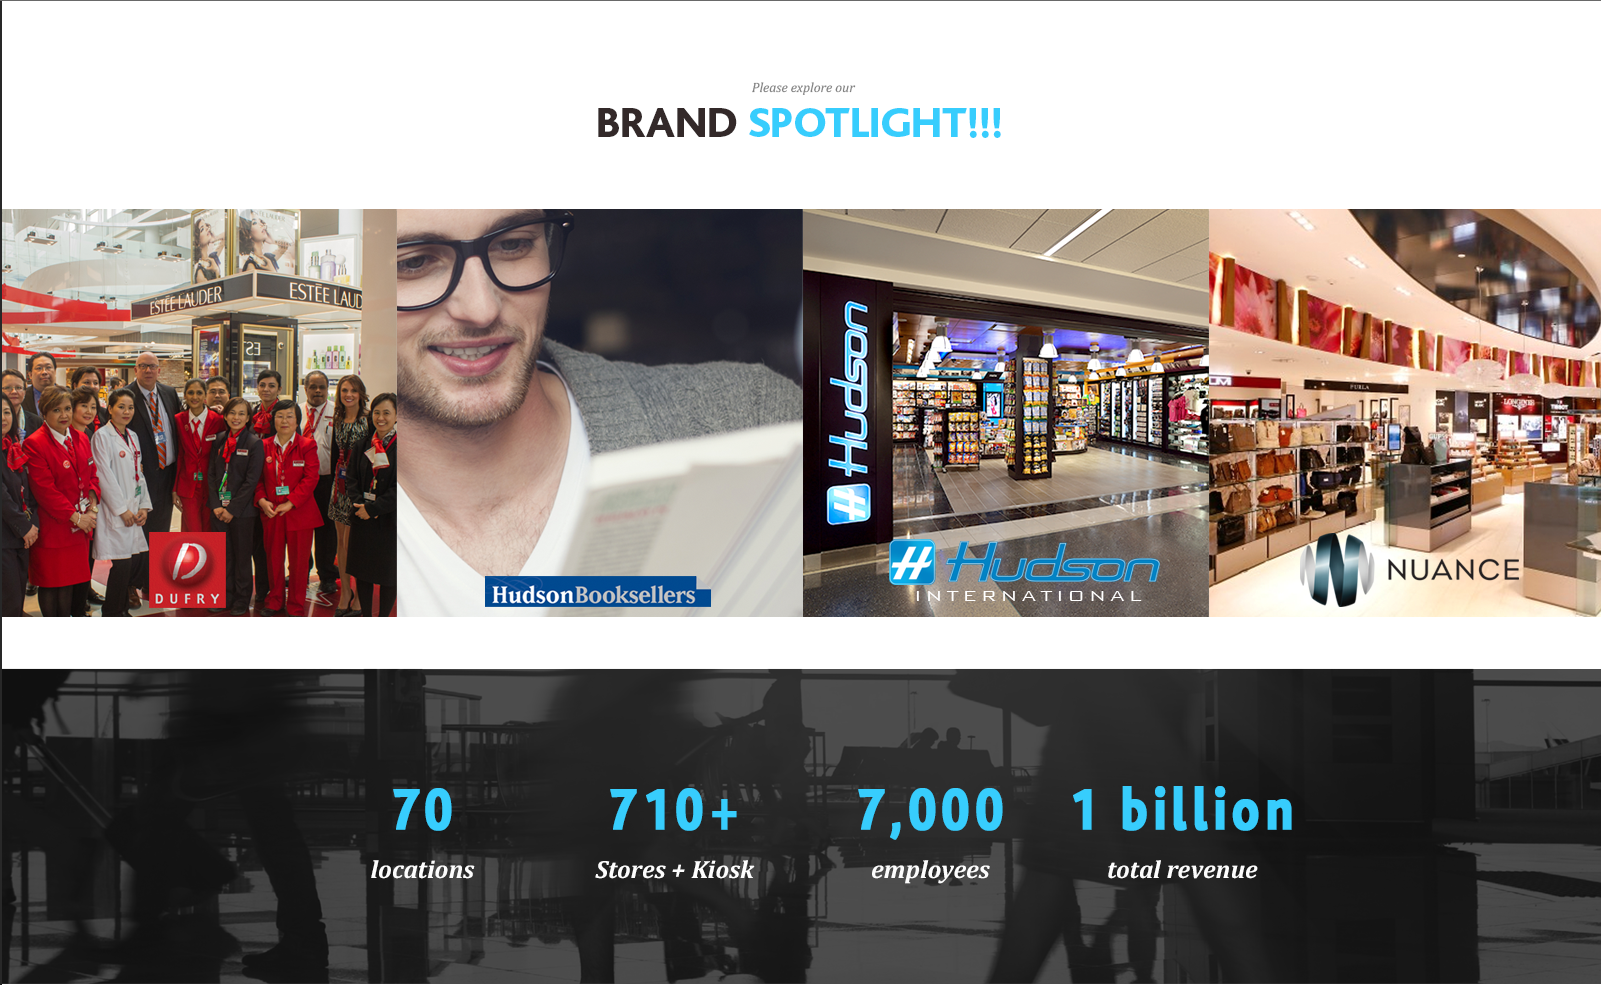 "Brand Spotlight" section